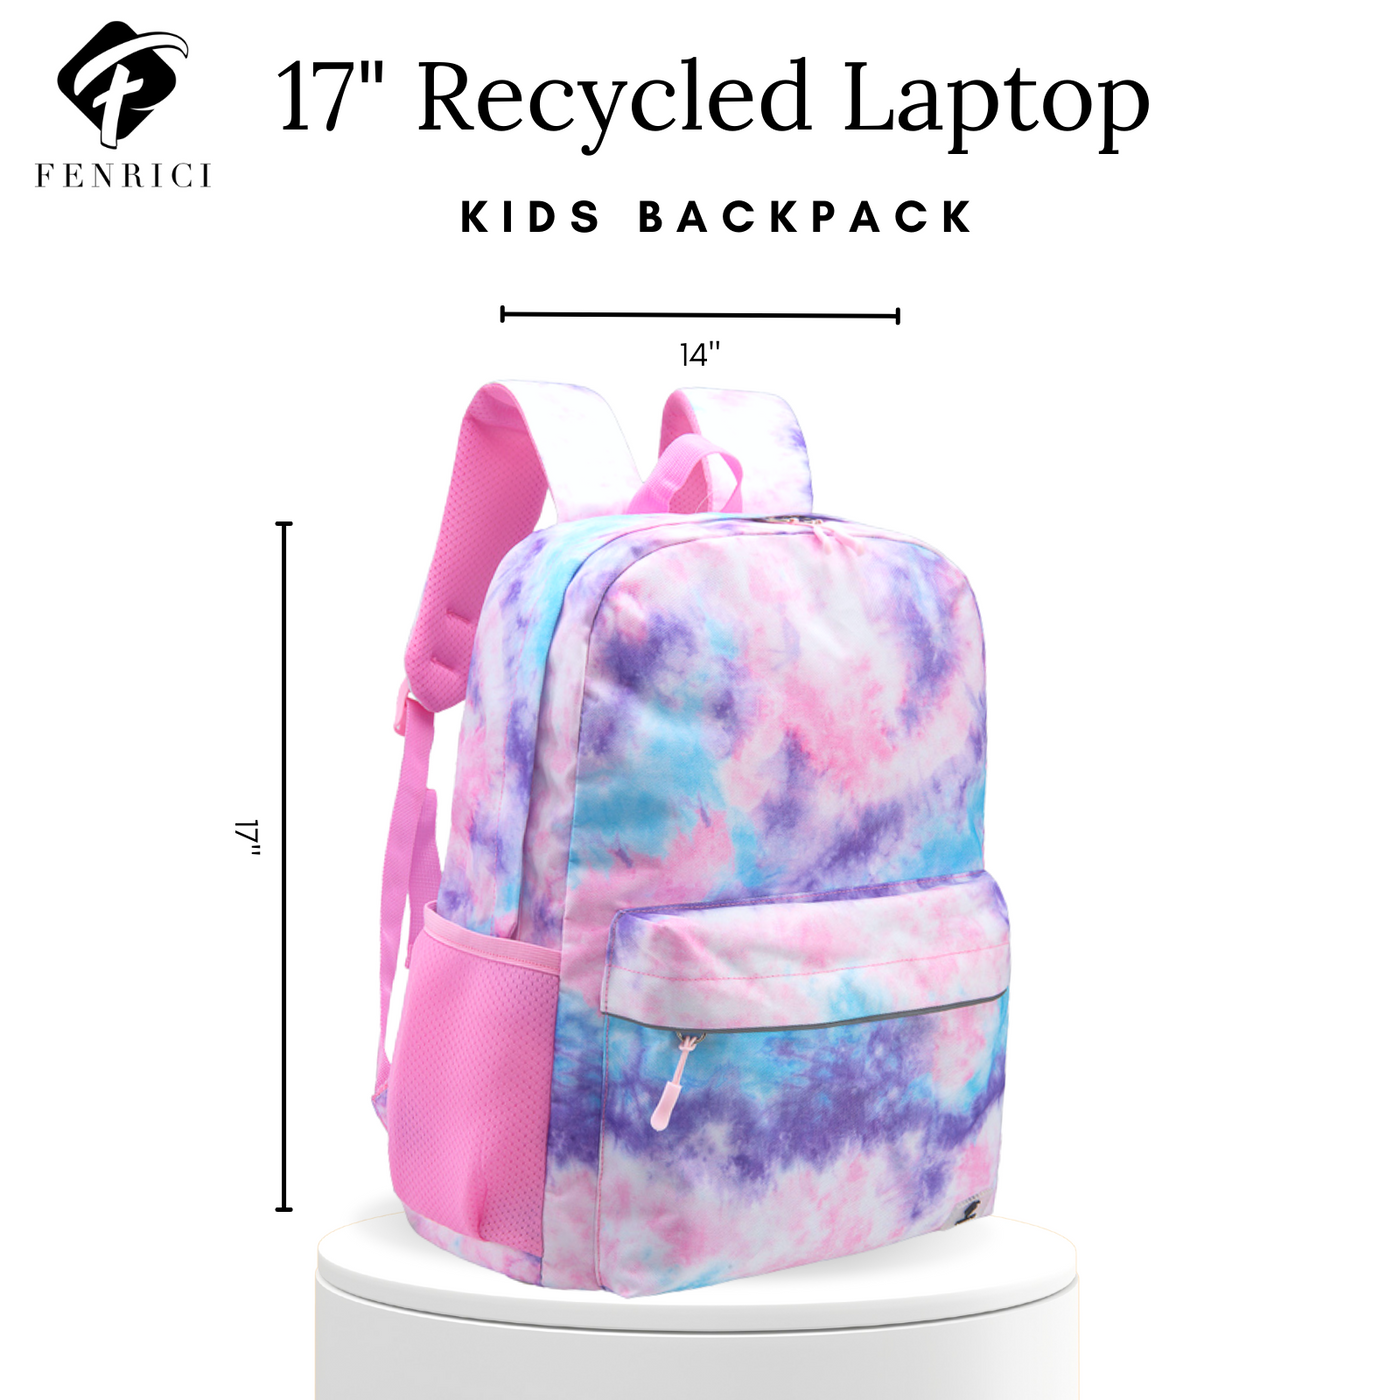 Girls/Women pink tie dye backpack w/ lunch box and water bottle 6 piece set